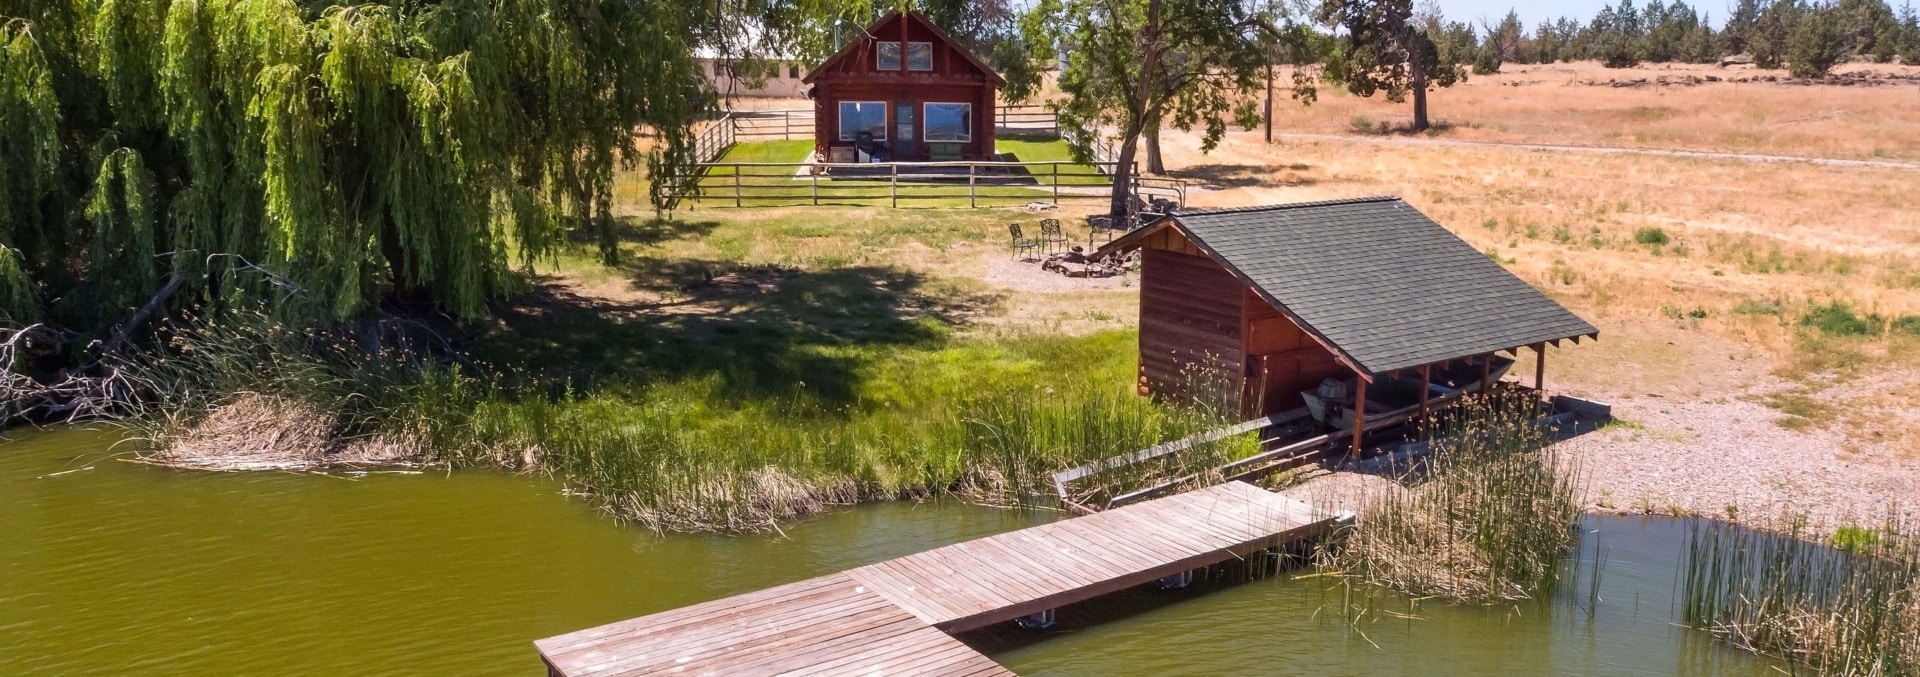 oregon cabin for sale houston lake ranch